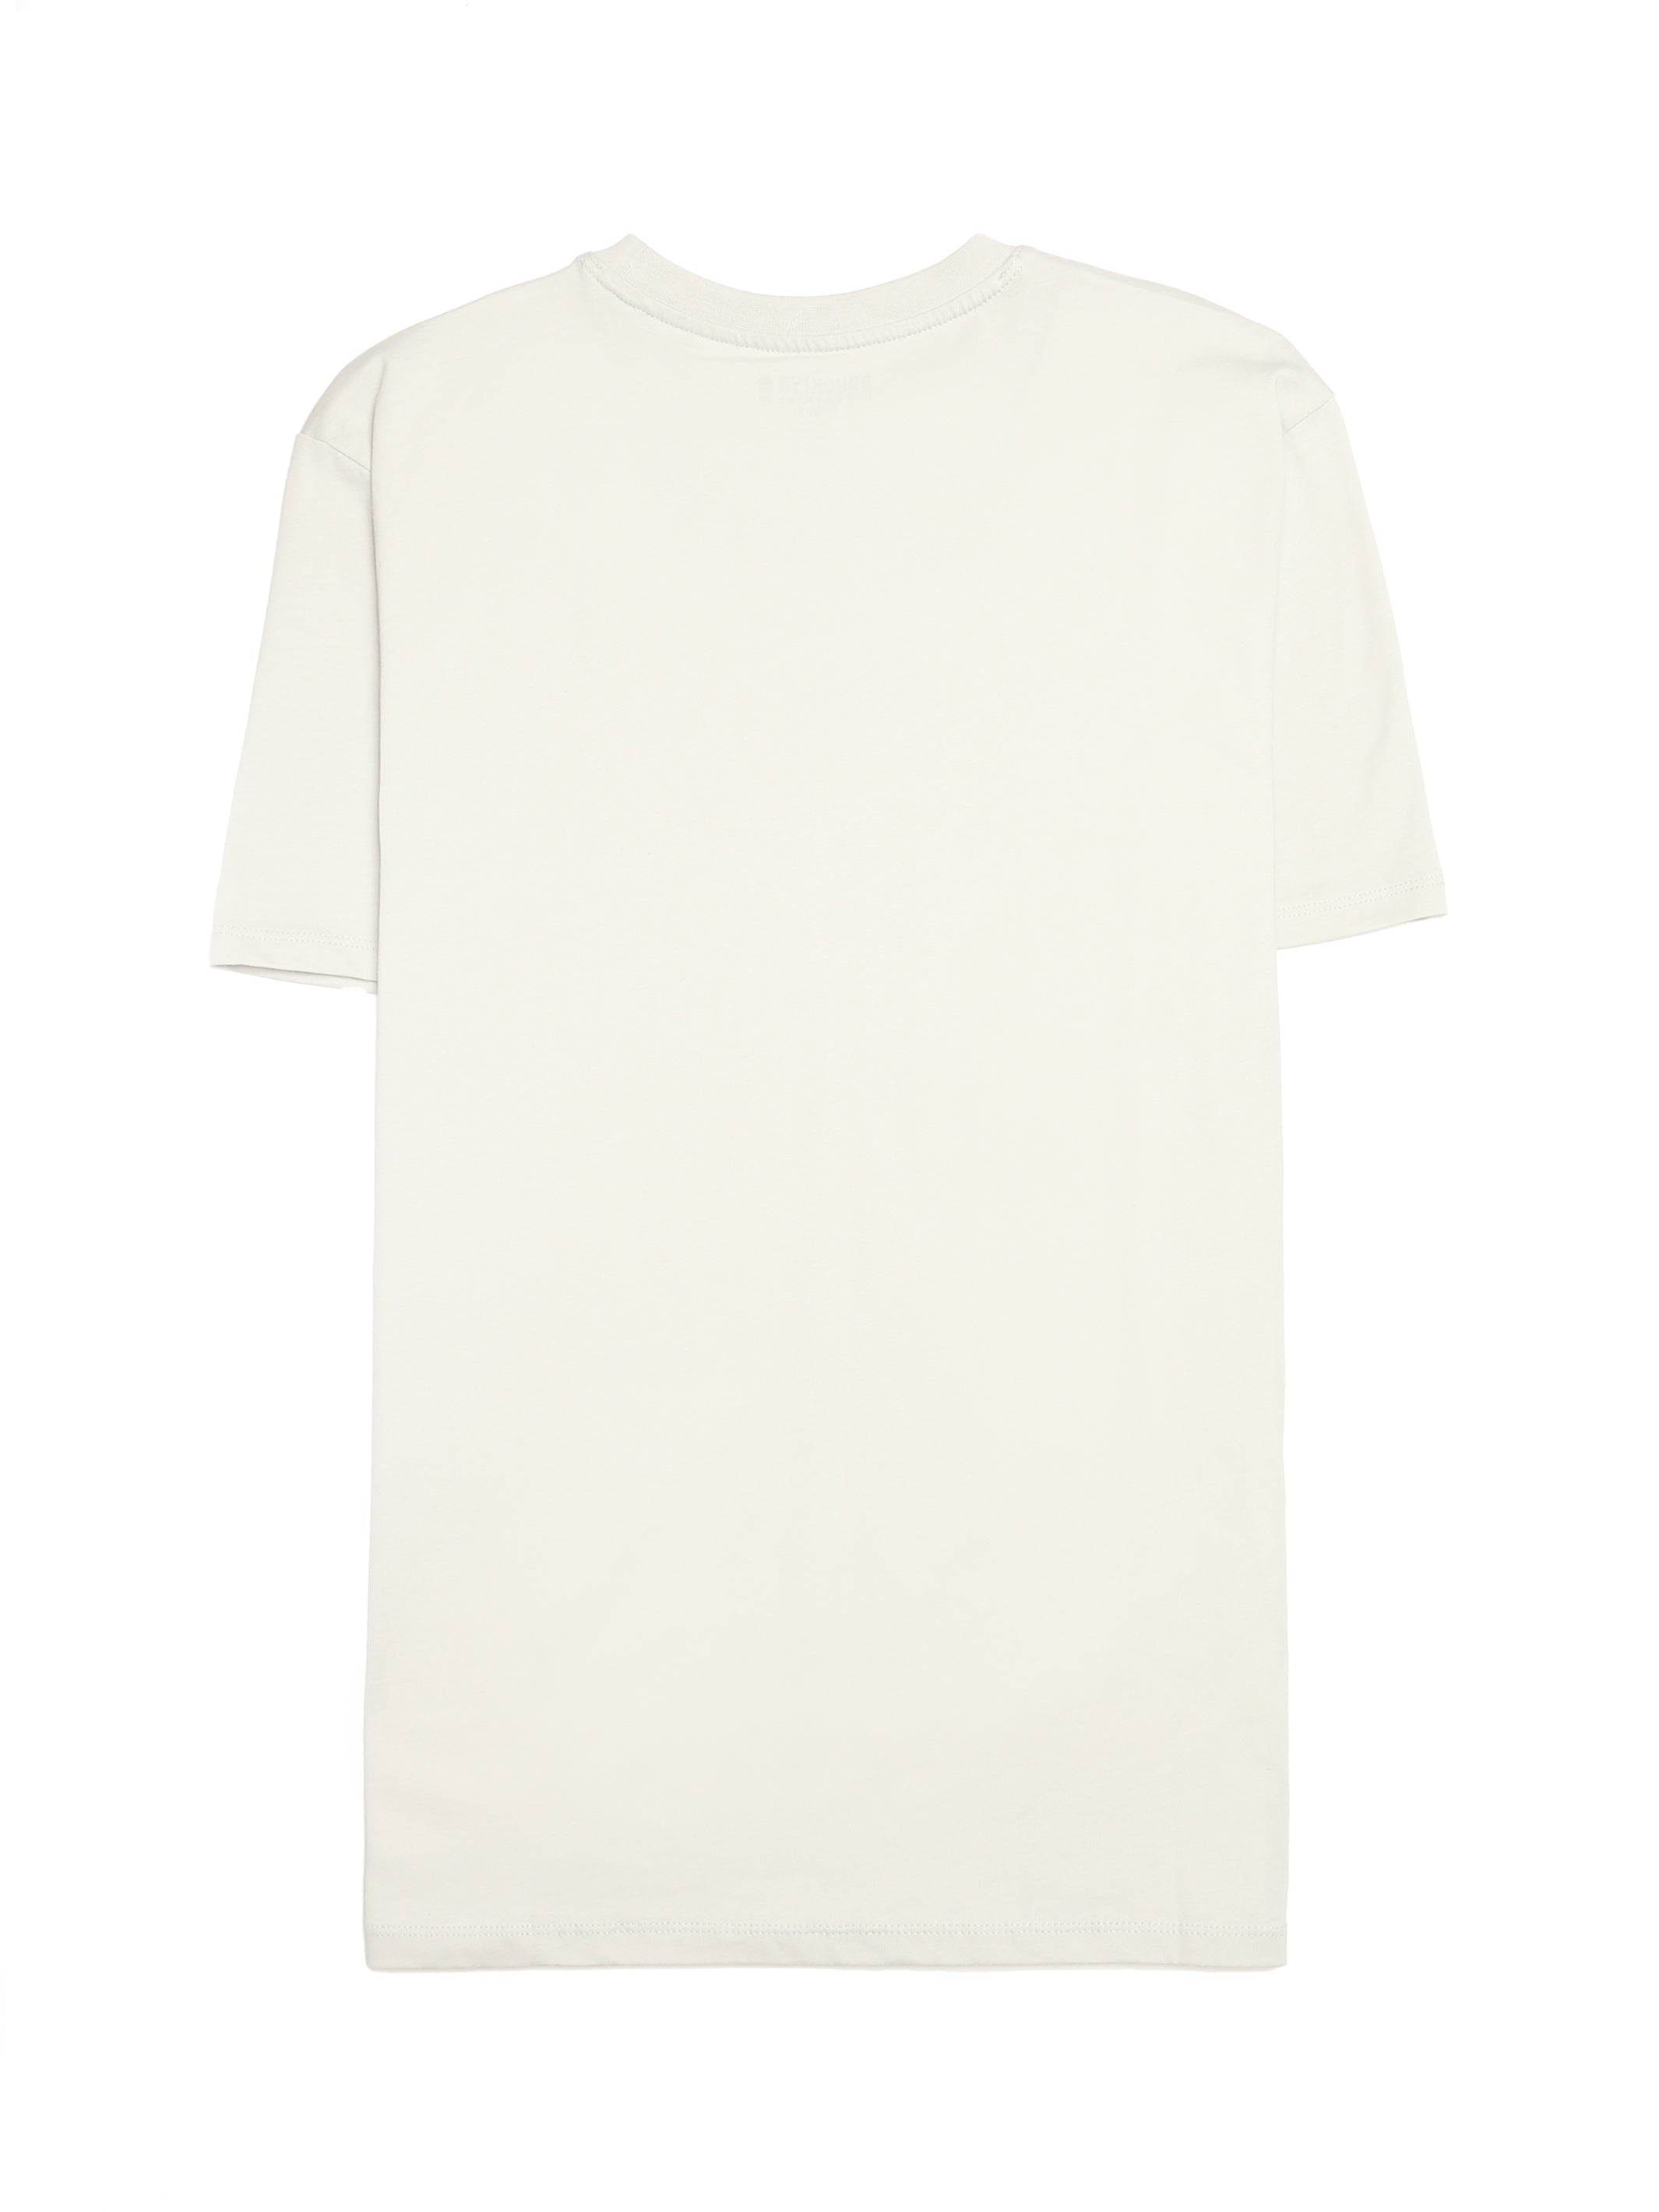 Men's Isometric T-shirt in Silver Birch - BROOKLYN INDUSTRIES